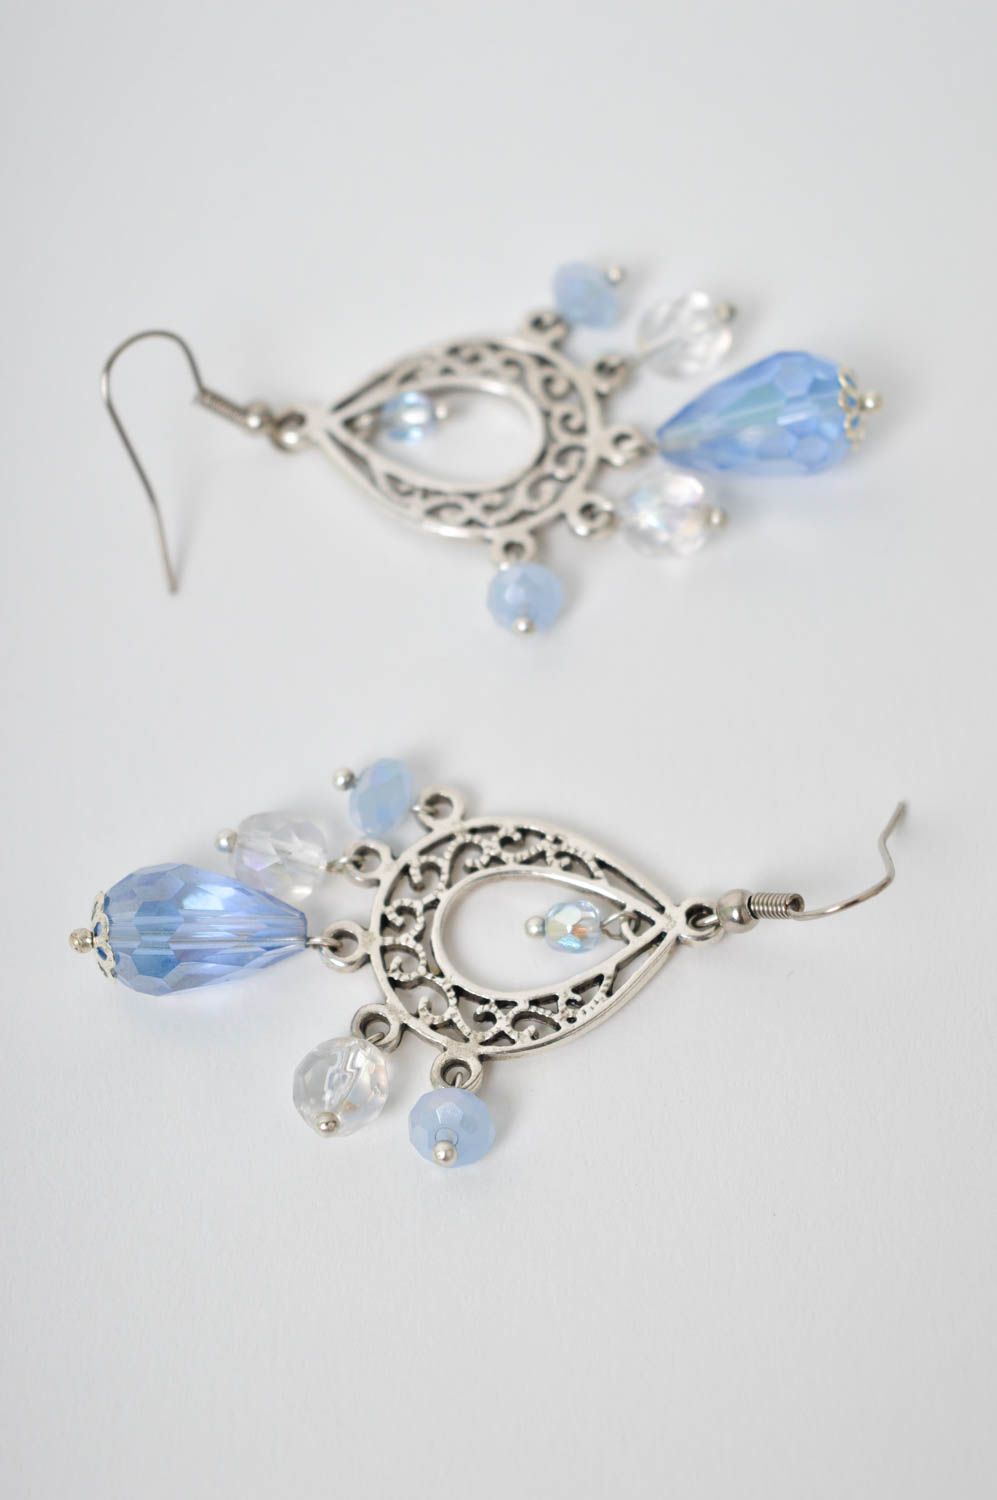 Beautiful handmade beaded earrings cool jewelry designs fashion trends photo 4